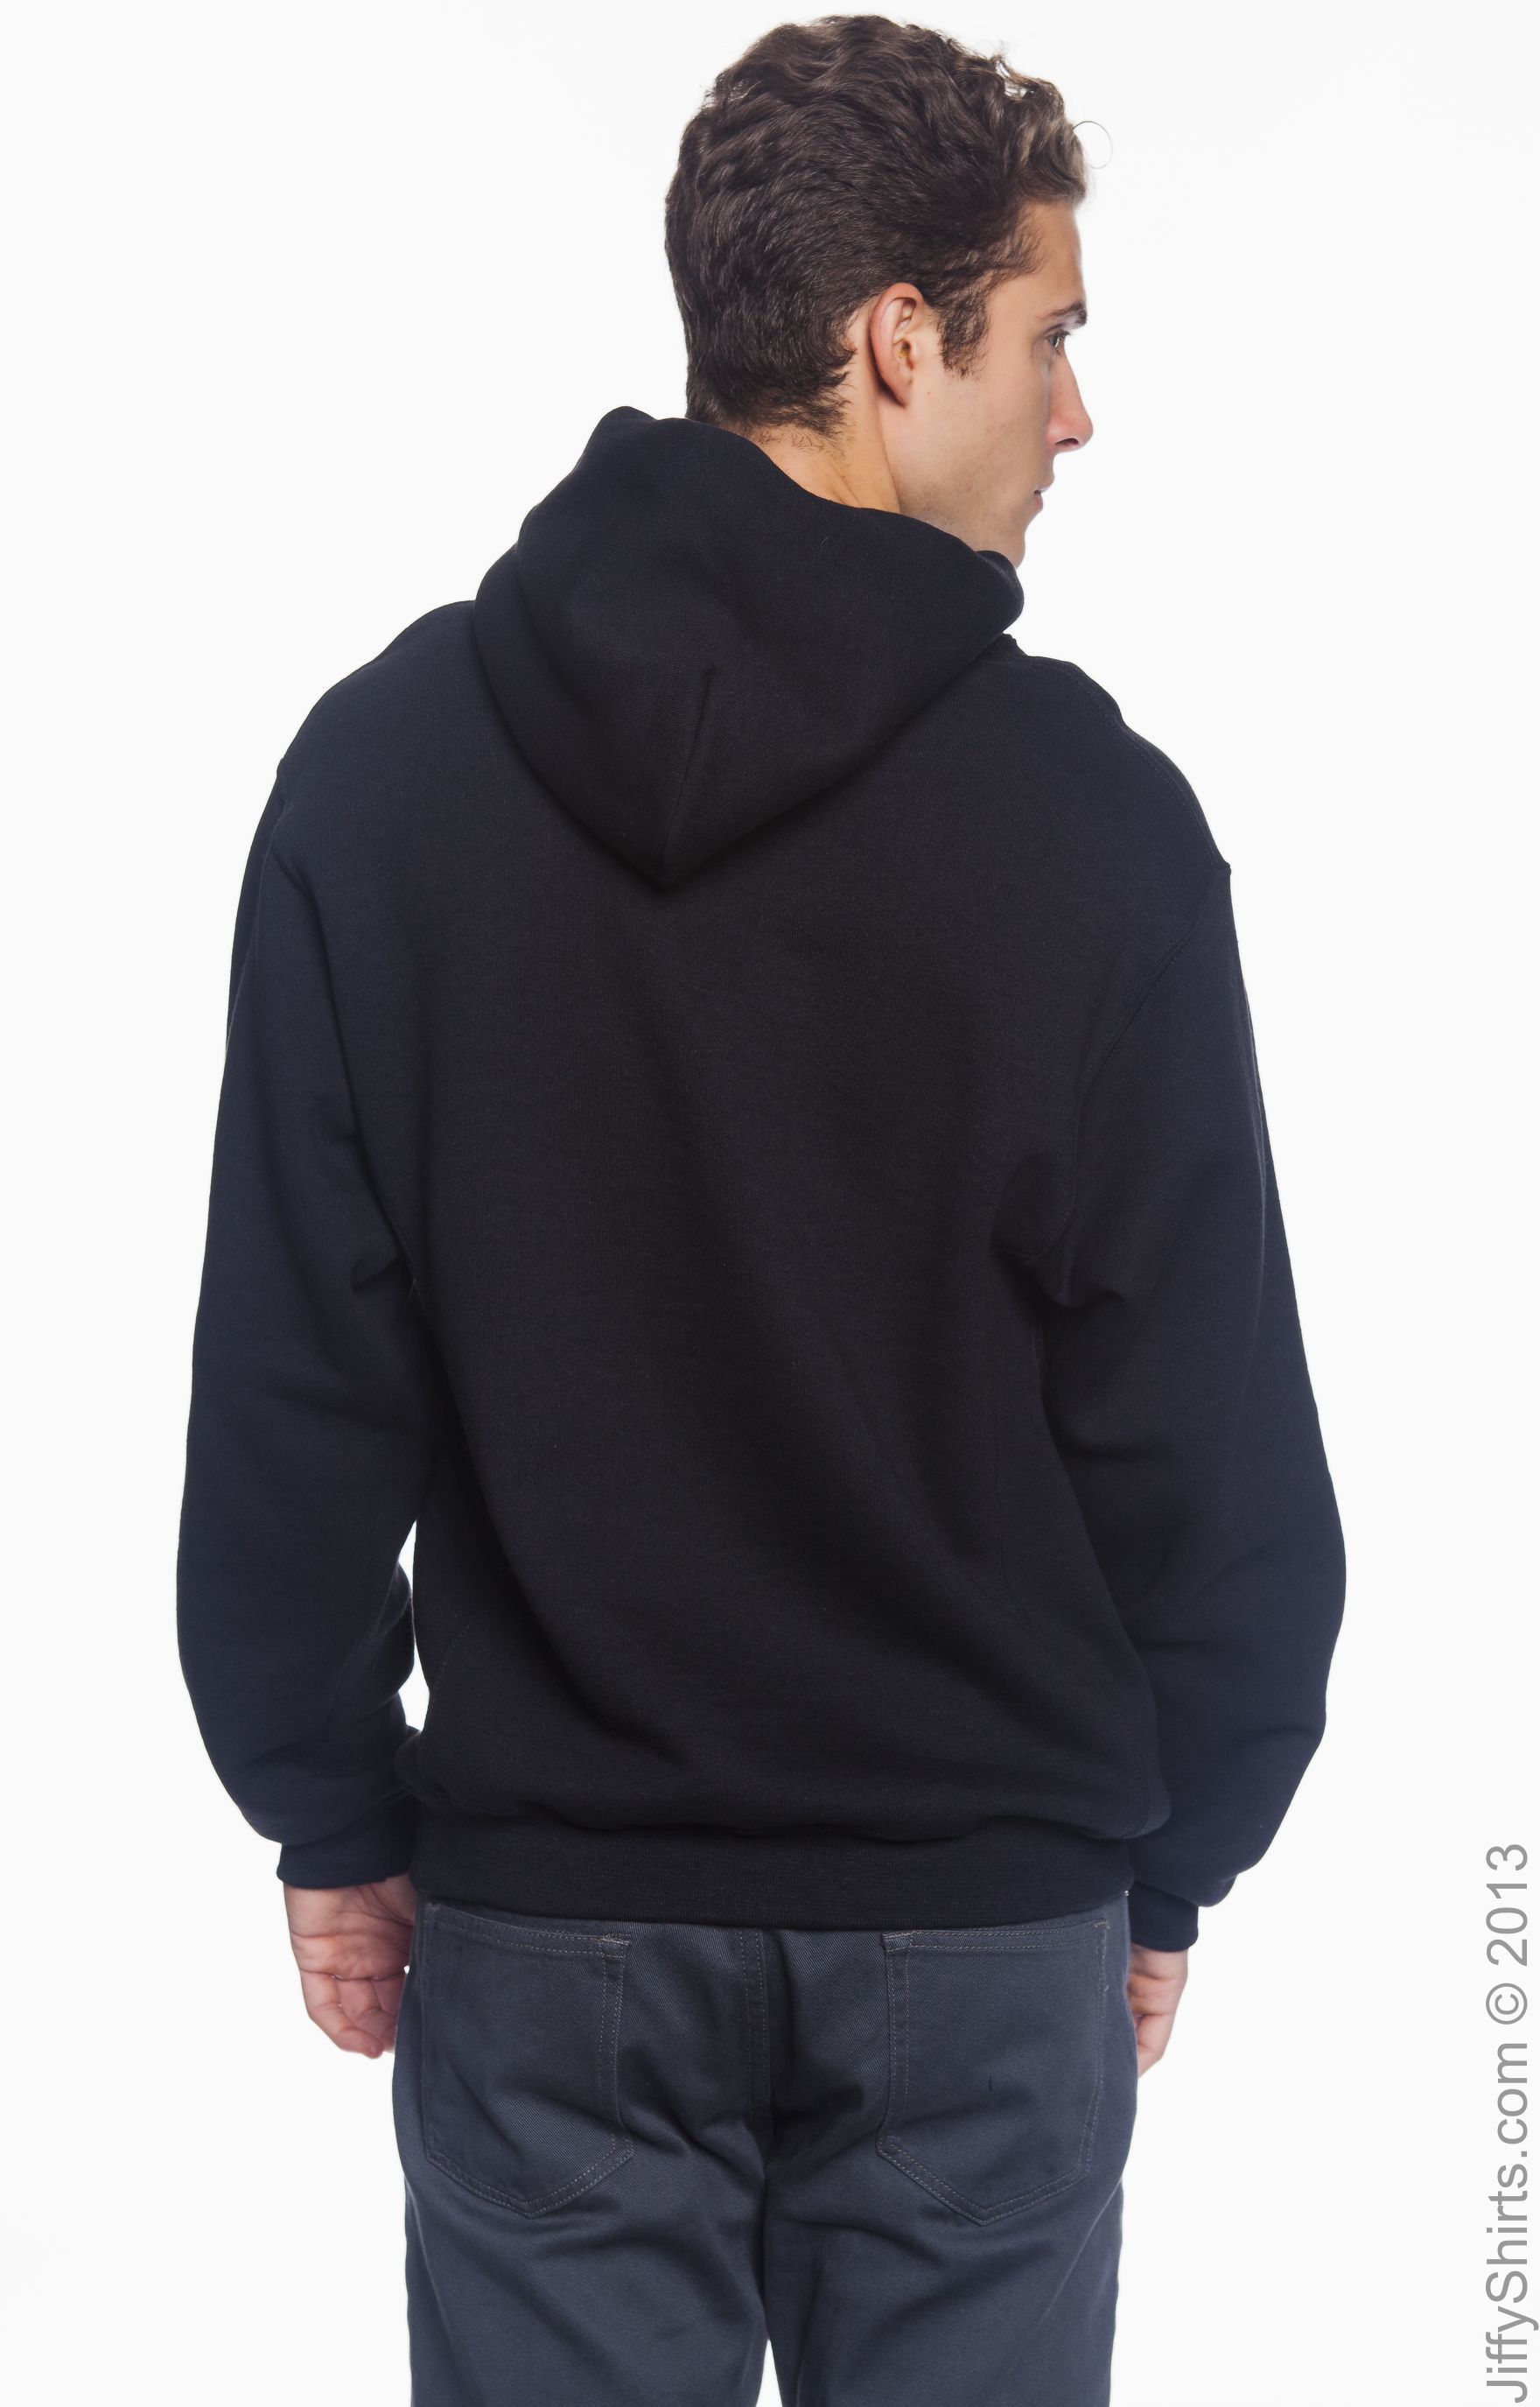 Russell Athletic 695 Hbm Dri Power® Hooded Pullover Sweatshirt